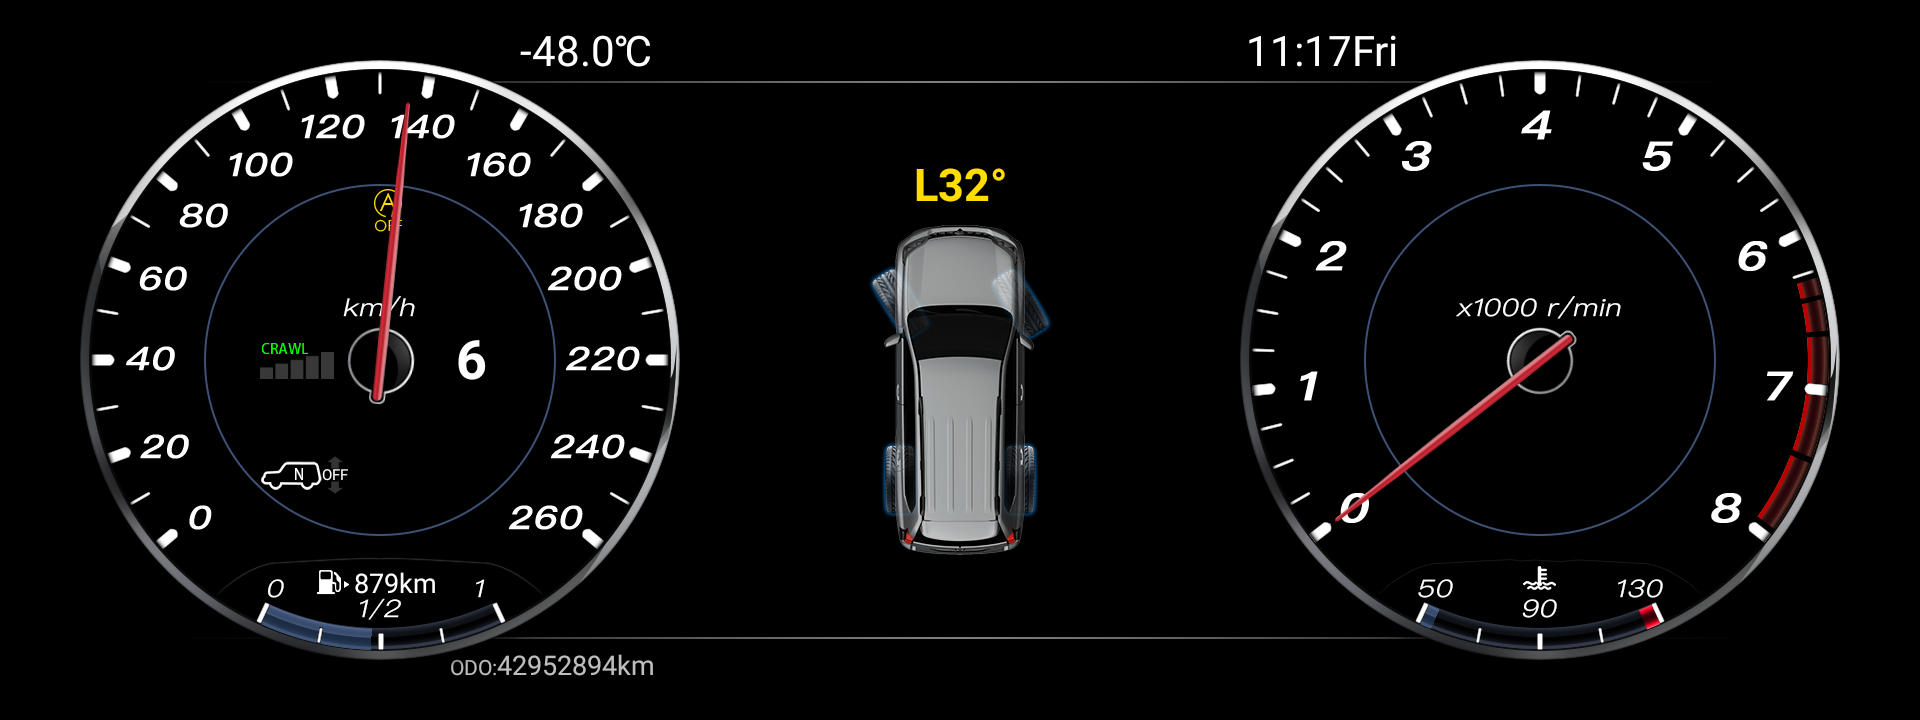 digital LCD dashboard for cars